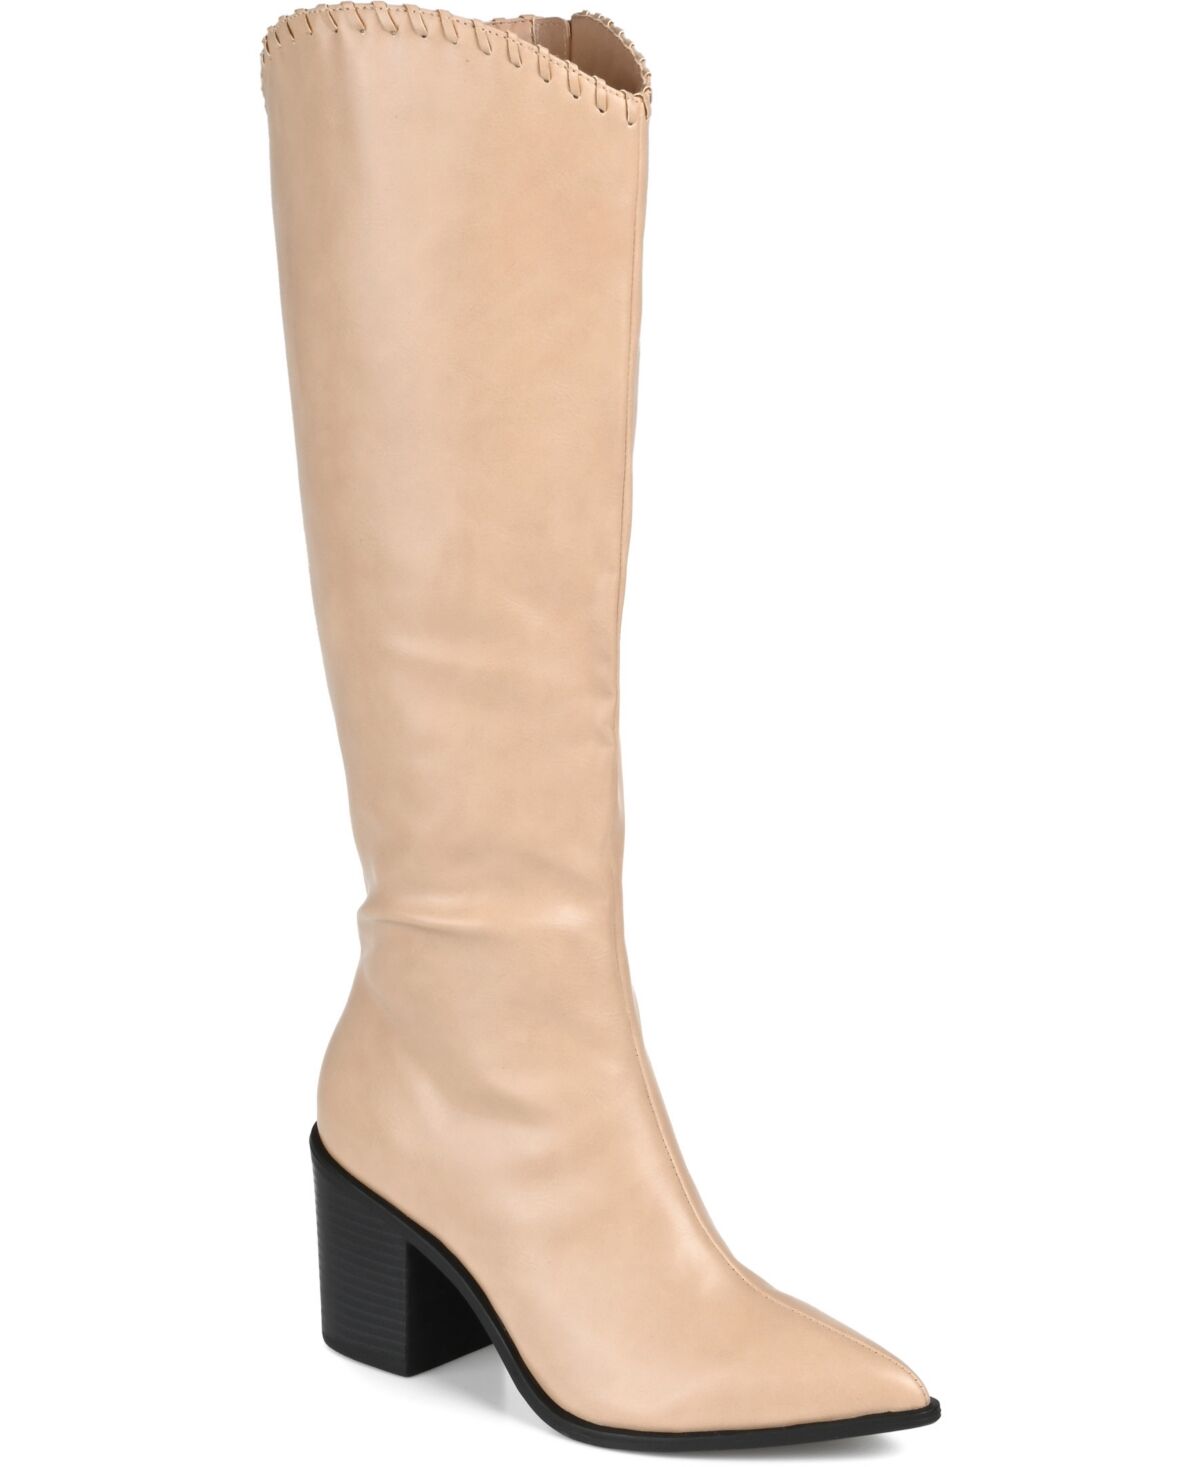 Journee Collection Women's Daria Cowboy Knee High Boots - Tan